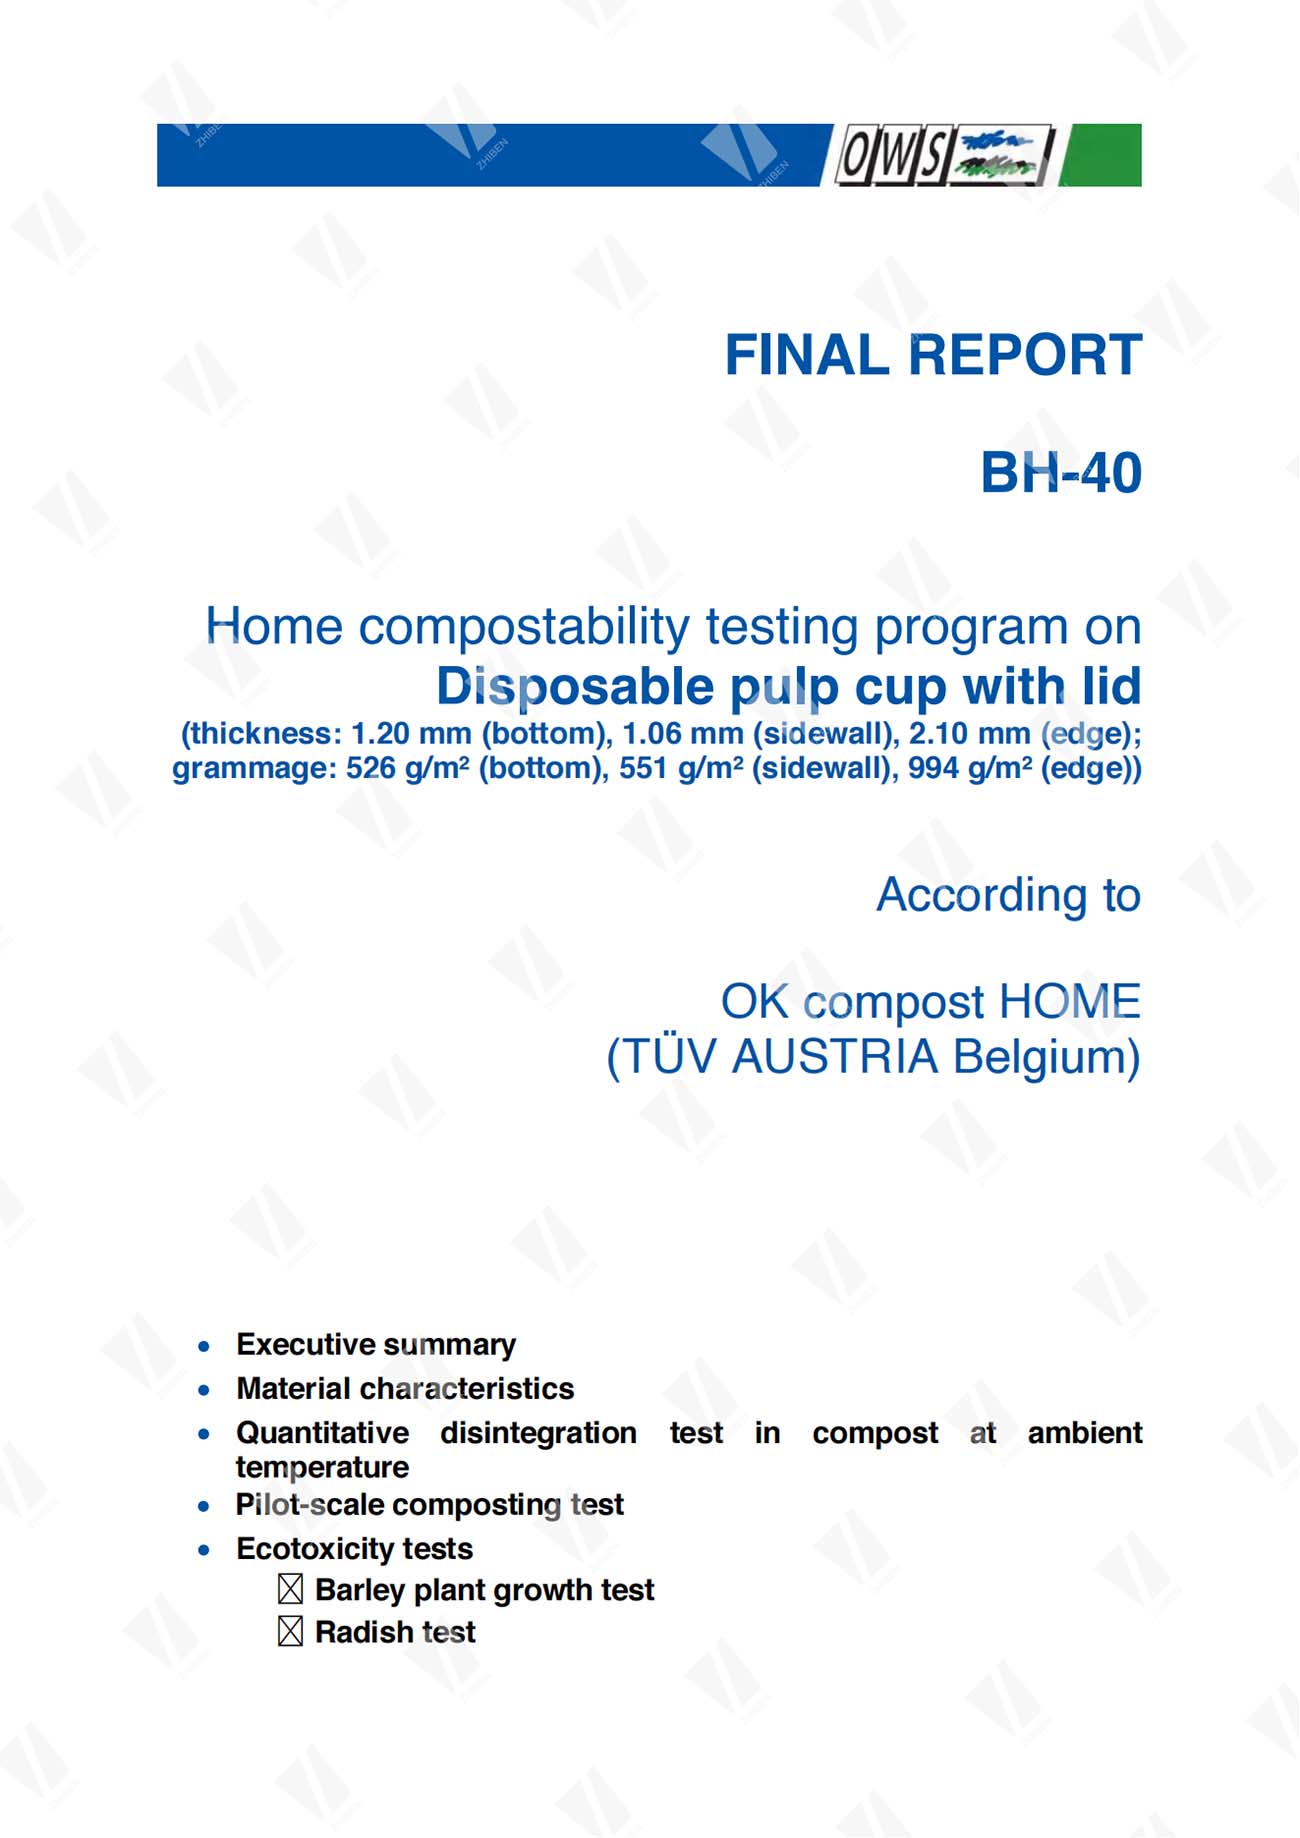 OK Compost Home Final Report-1